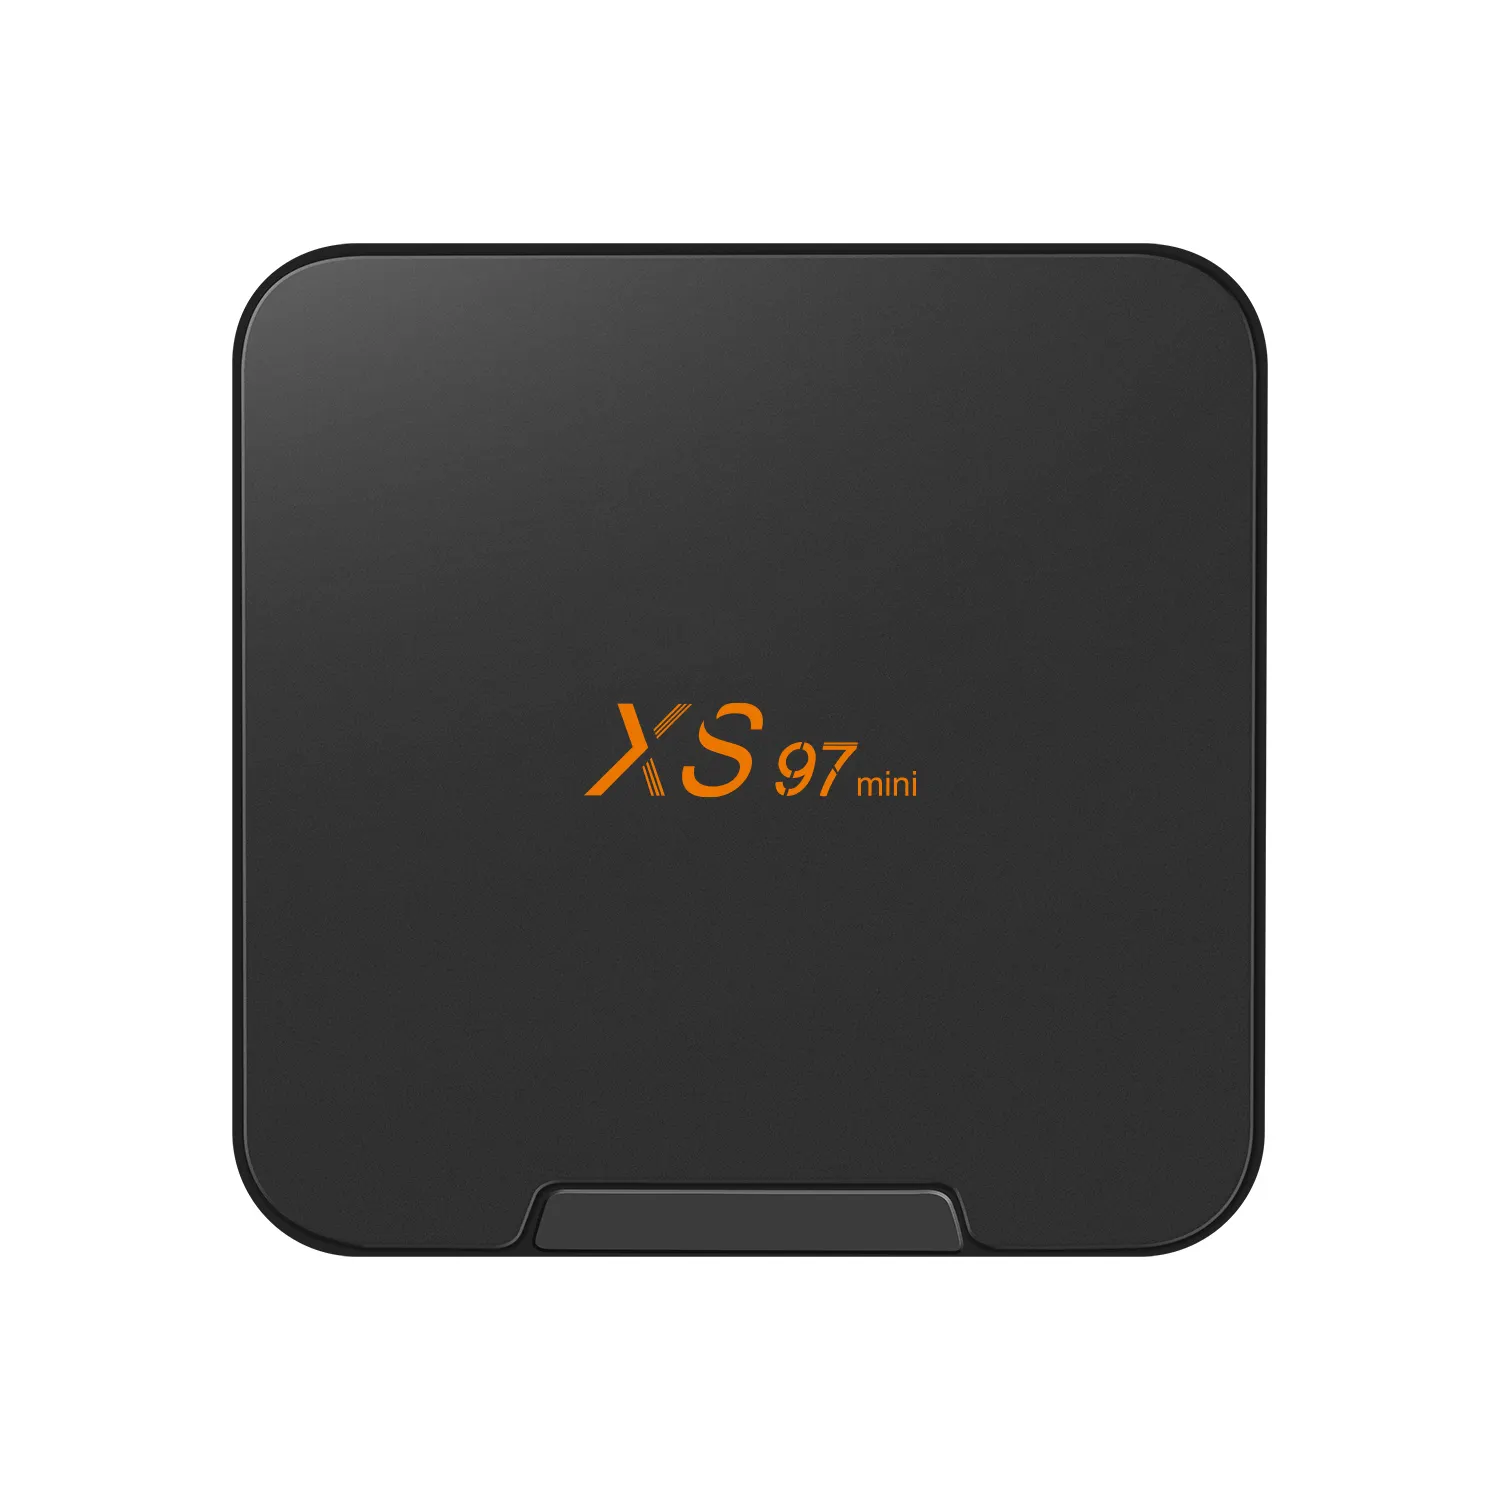 XS97 grosir mini produk baru Mali-G31 MP2 android 11 kotak tv kotak iptv pintar termurah